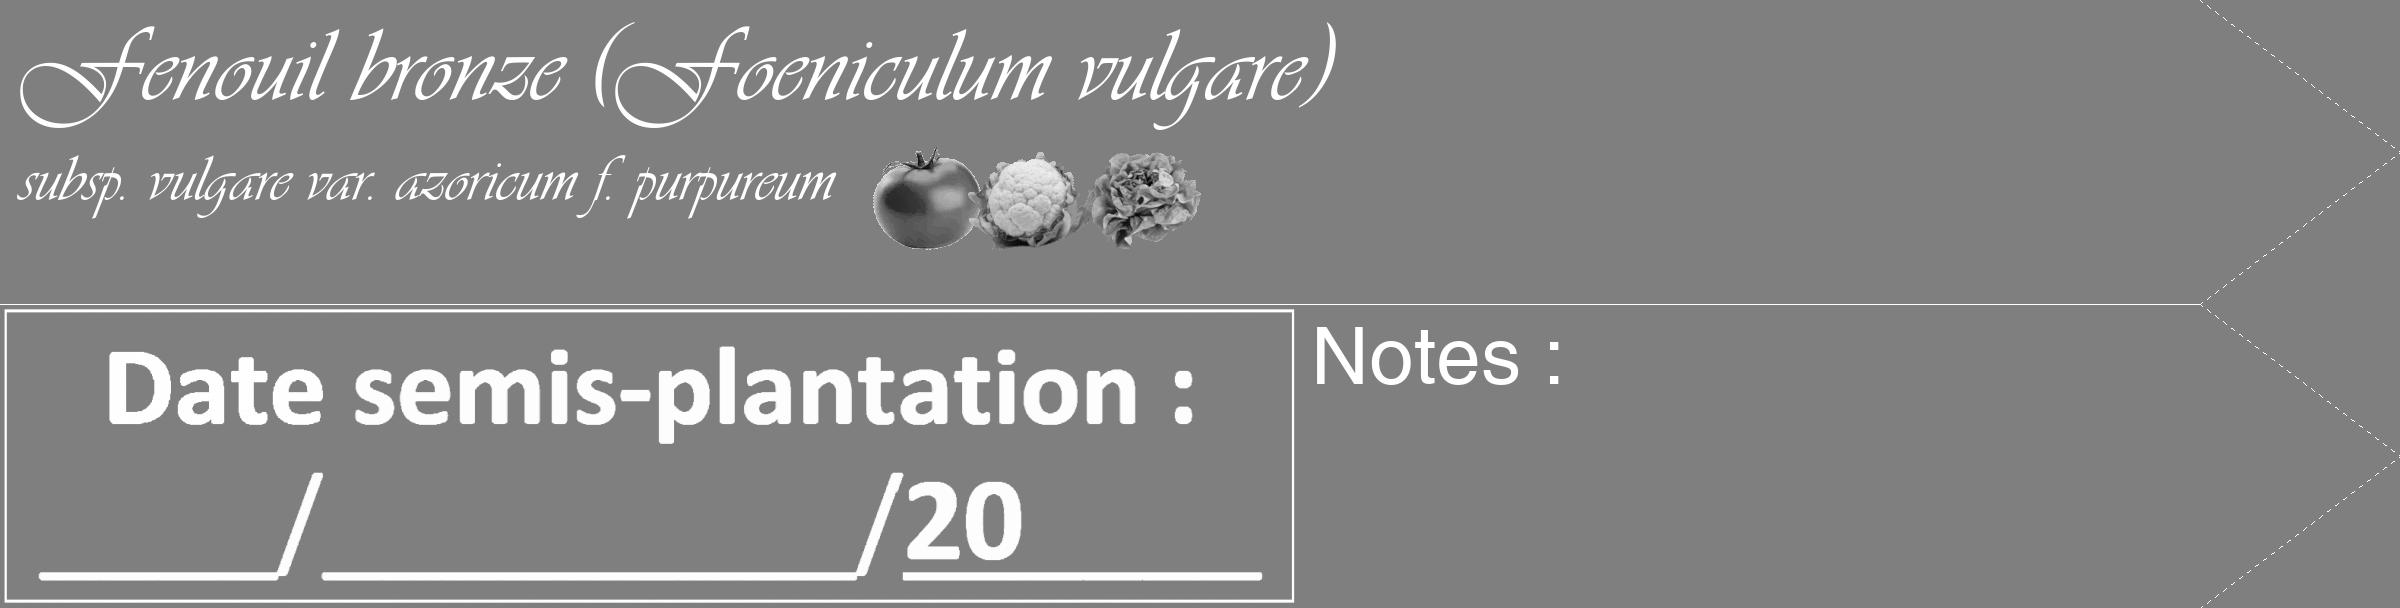 Étiquette de : Foeniculum vulgare subsp. vulgare var. azoricum f. purpureum - format c - style blanche31_simple_simpleviv avec comestibilité simplifiée